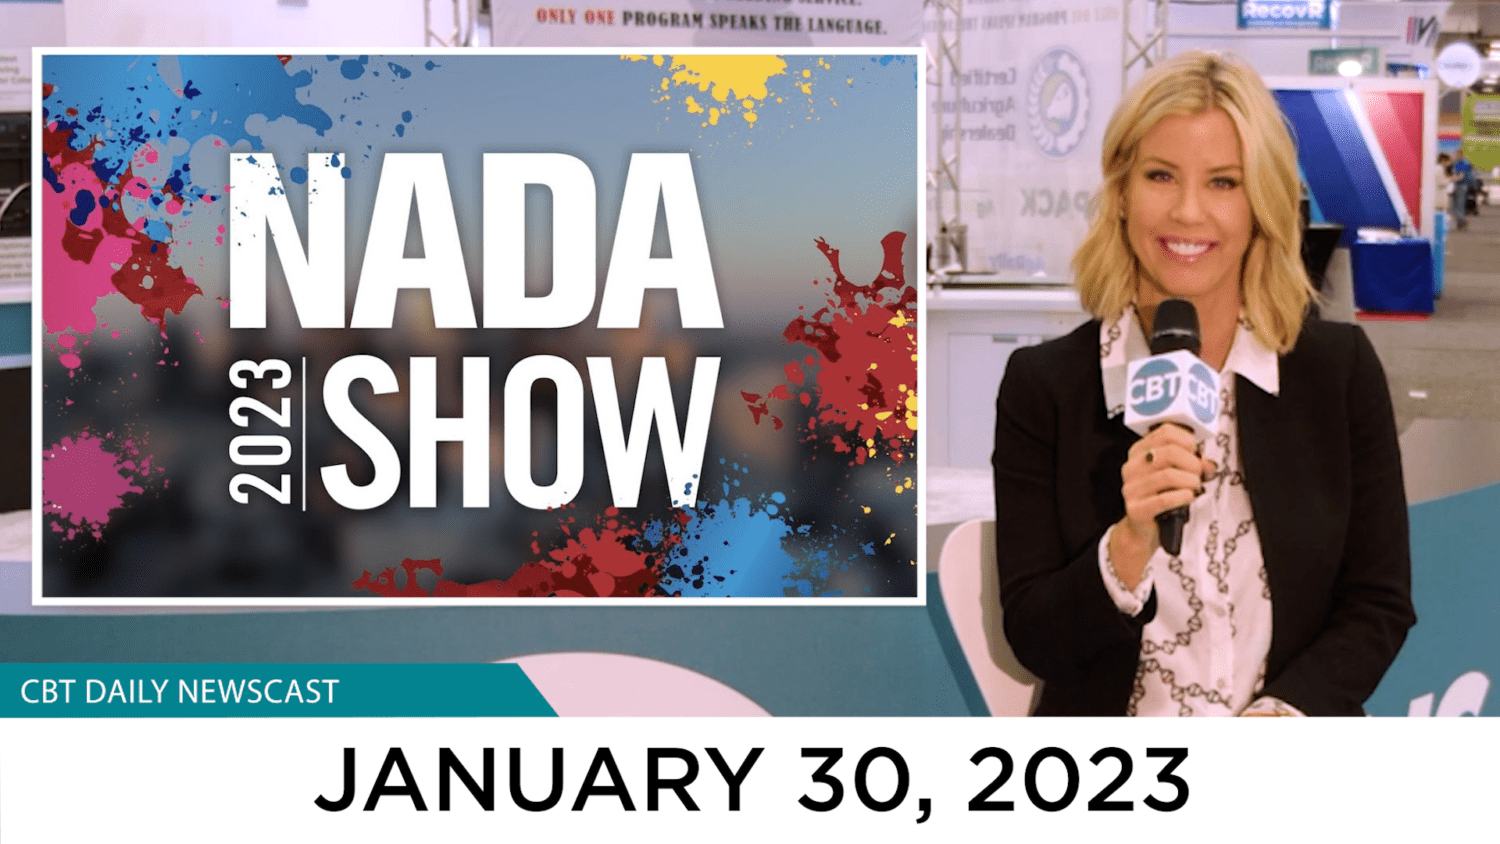 Special edition newscast: NADA highlights